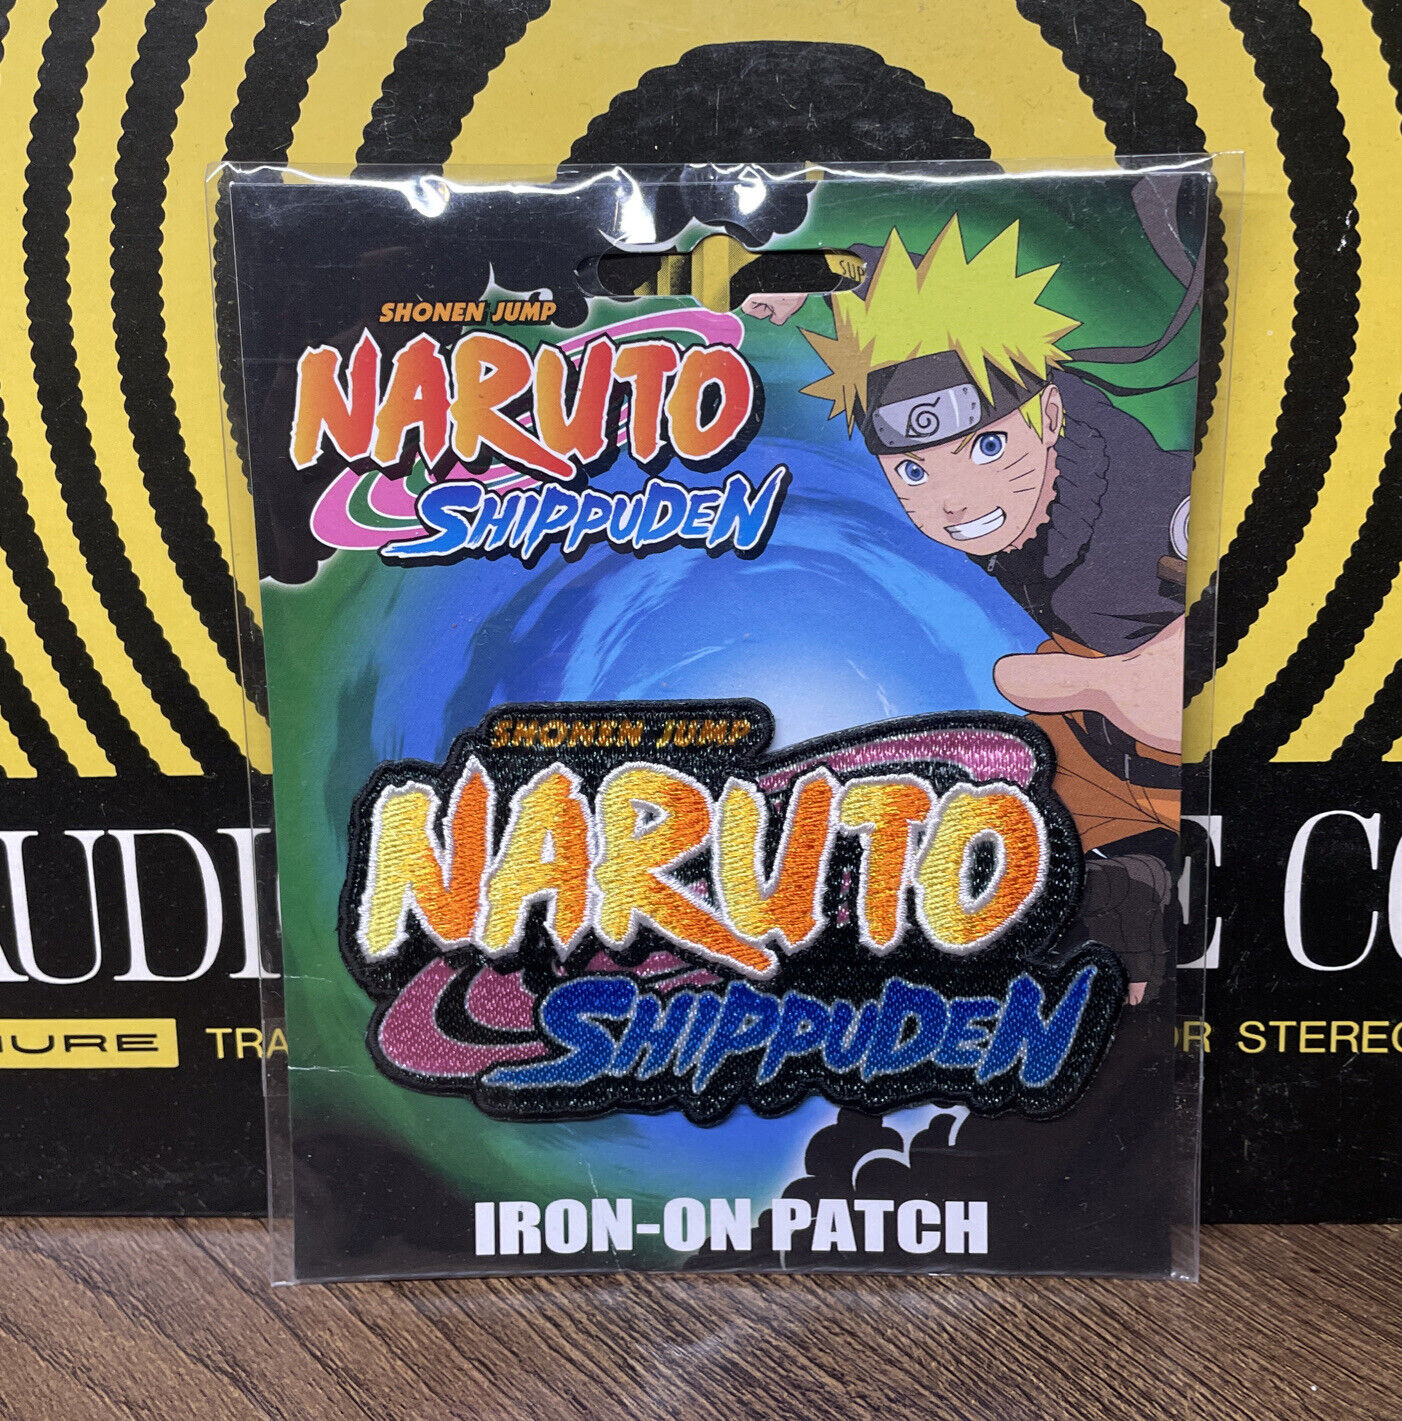 Shonen Jump Naruto Shippuden Logo Iron-On Patch Ata Boy Brand New